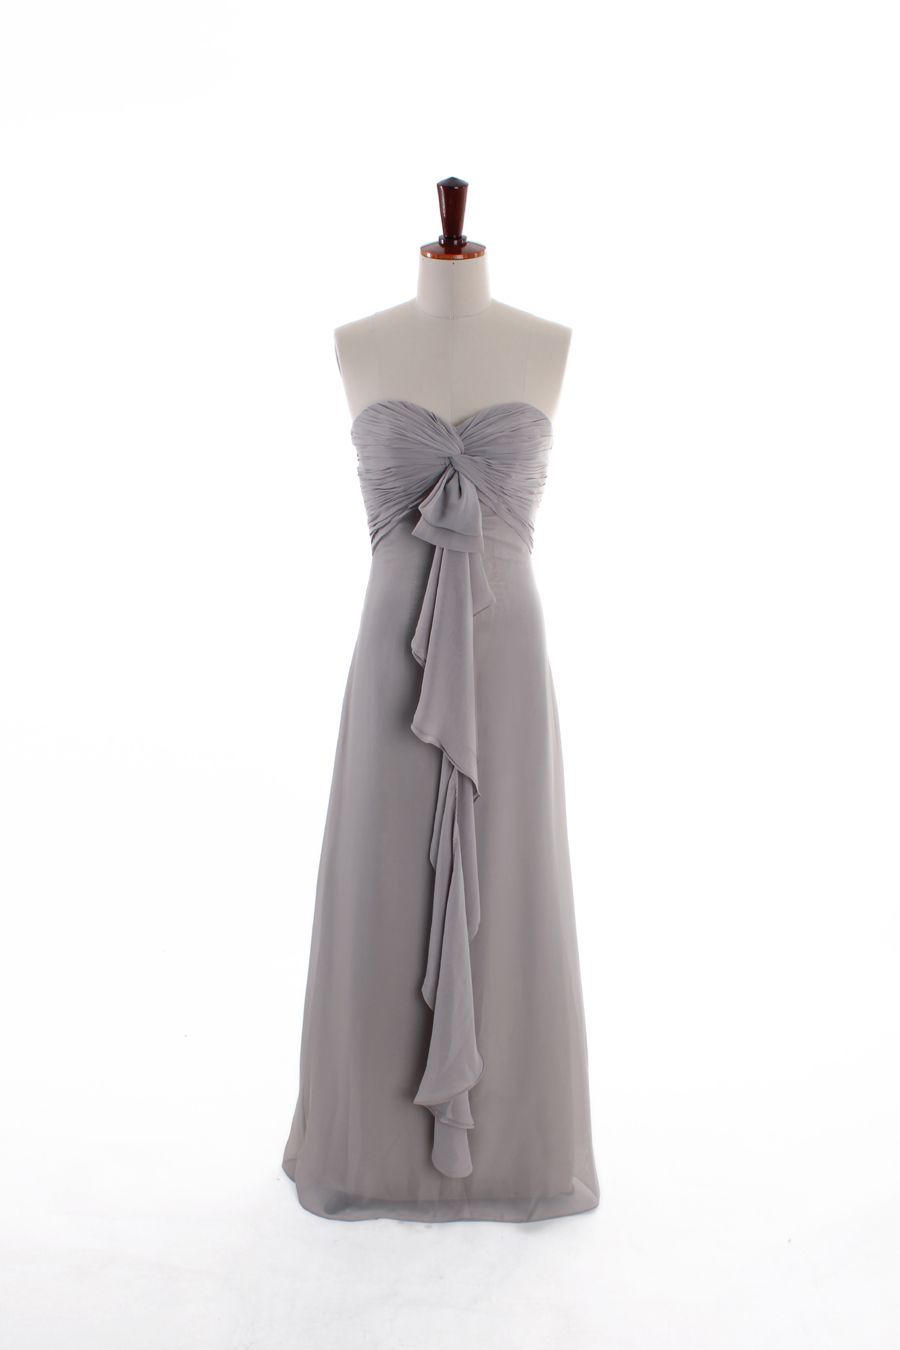 Amazing A-line empire waist chiffon dress for bridesmaid